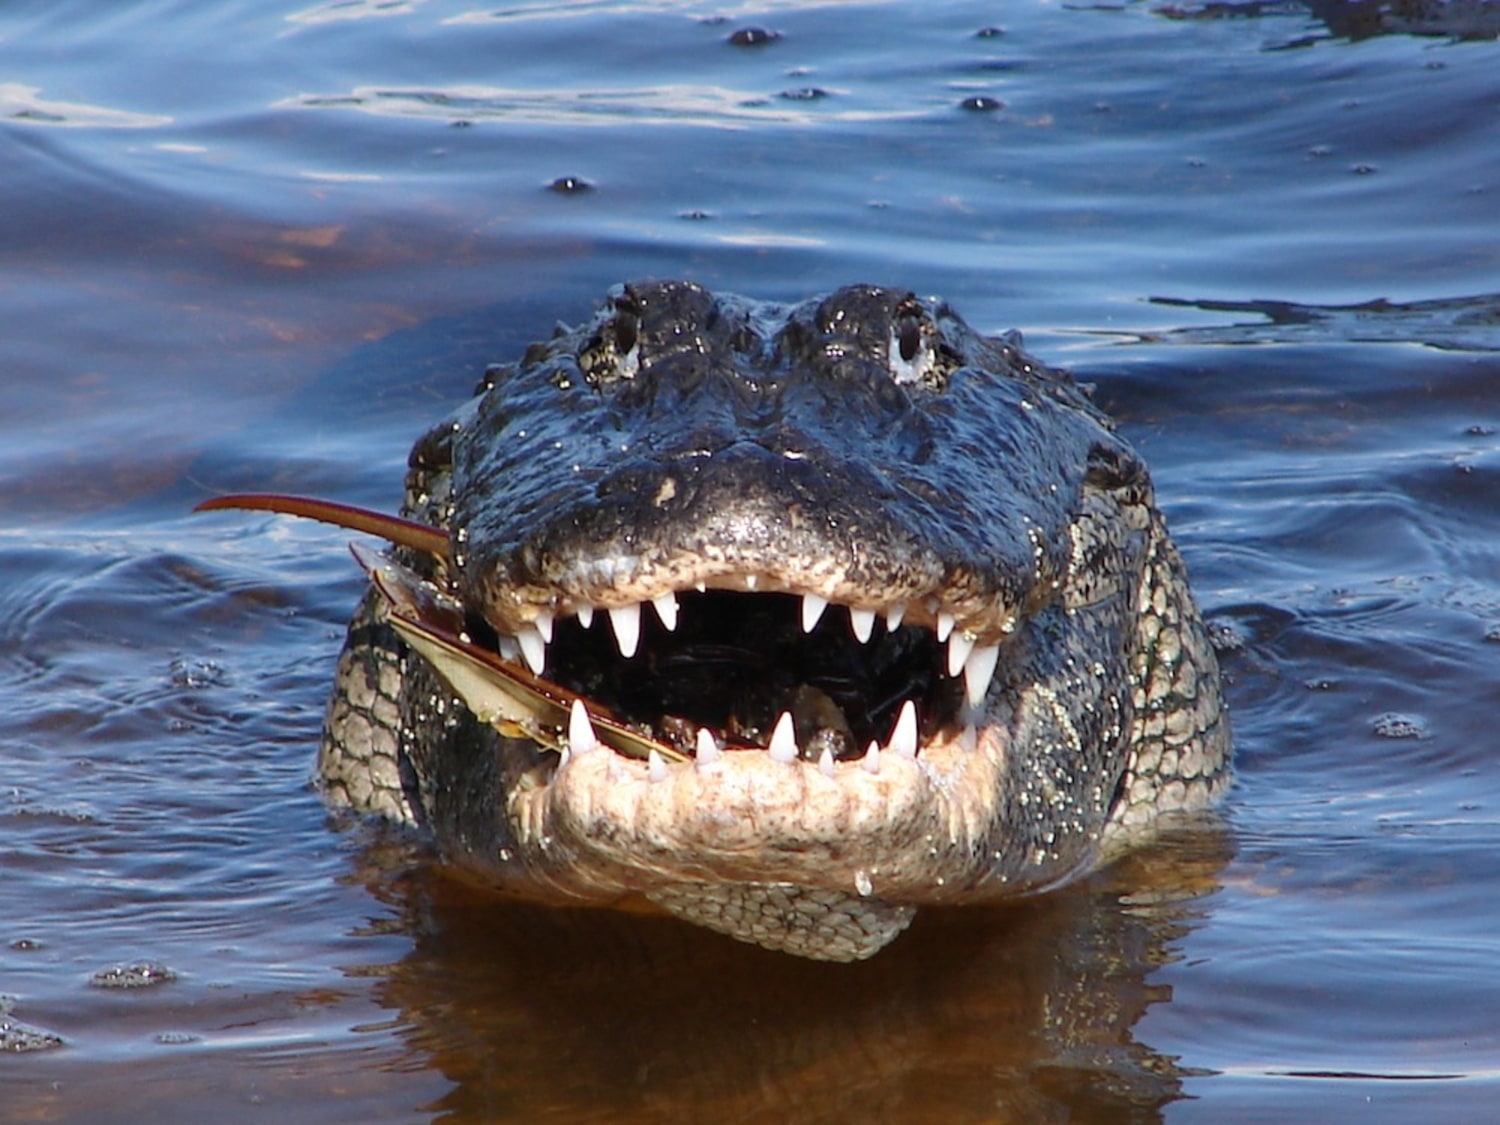 Crocodile, alligator jaws more sensitive than human fingertips